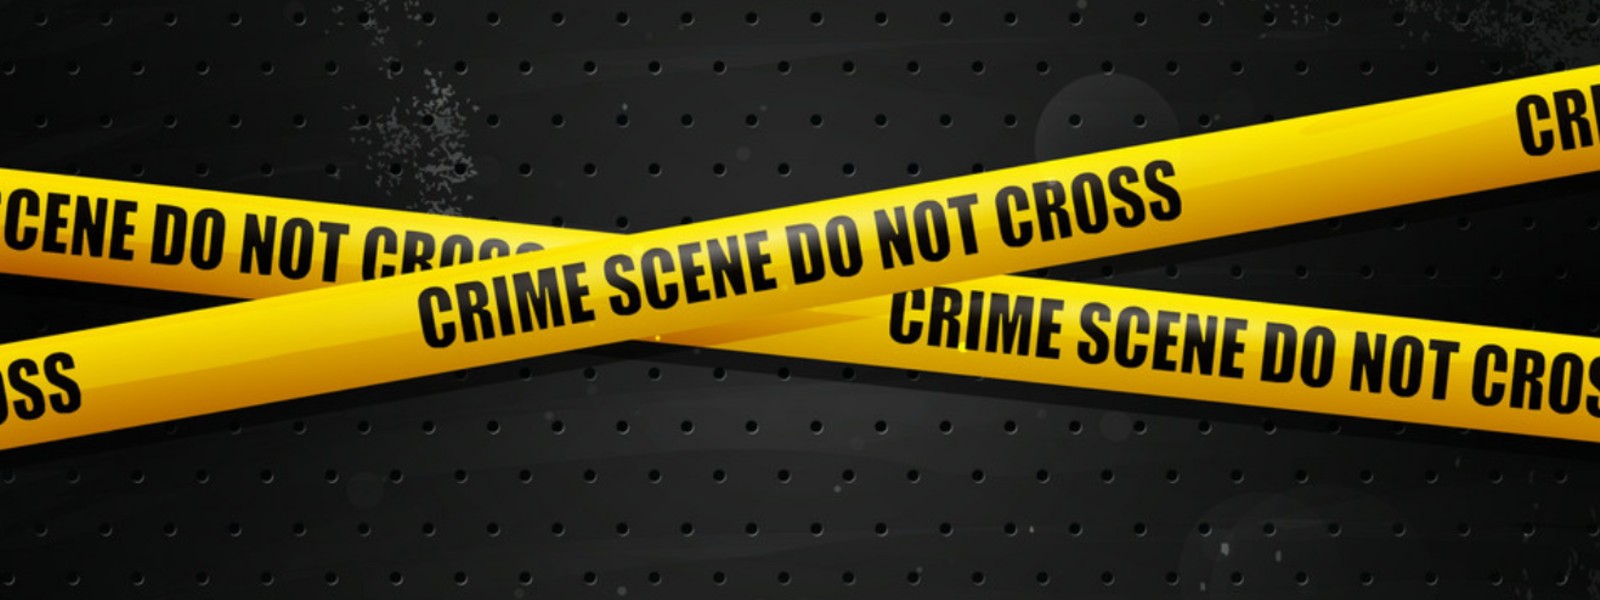 Double Homicide in Damana; Police Investigation Underway